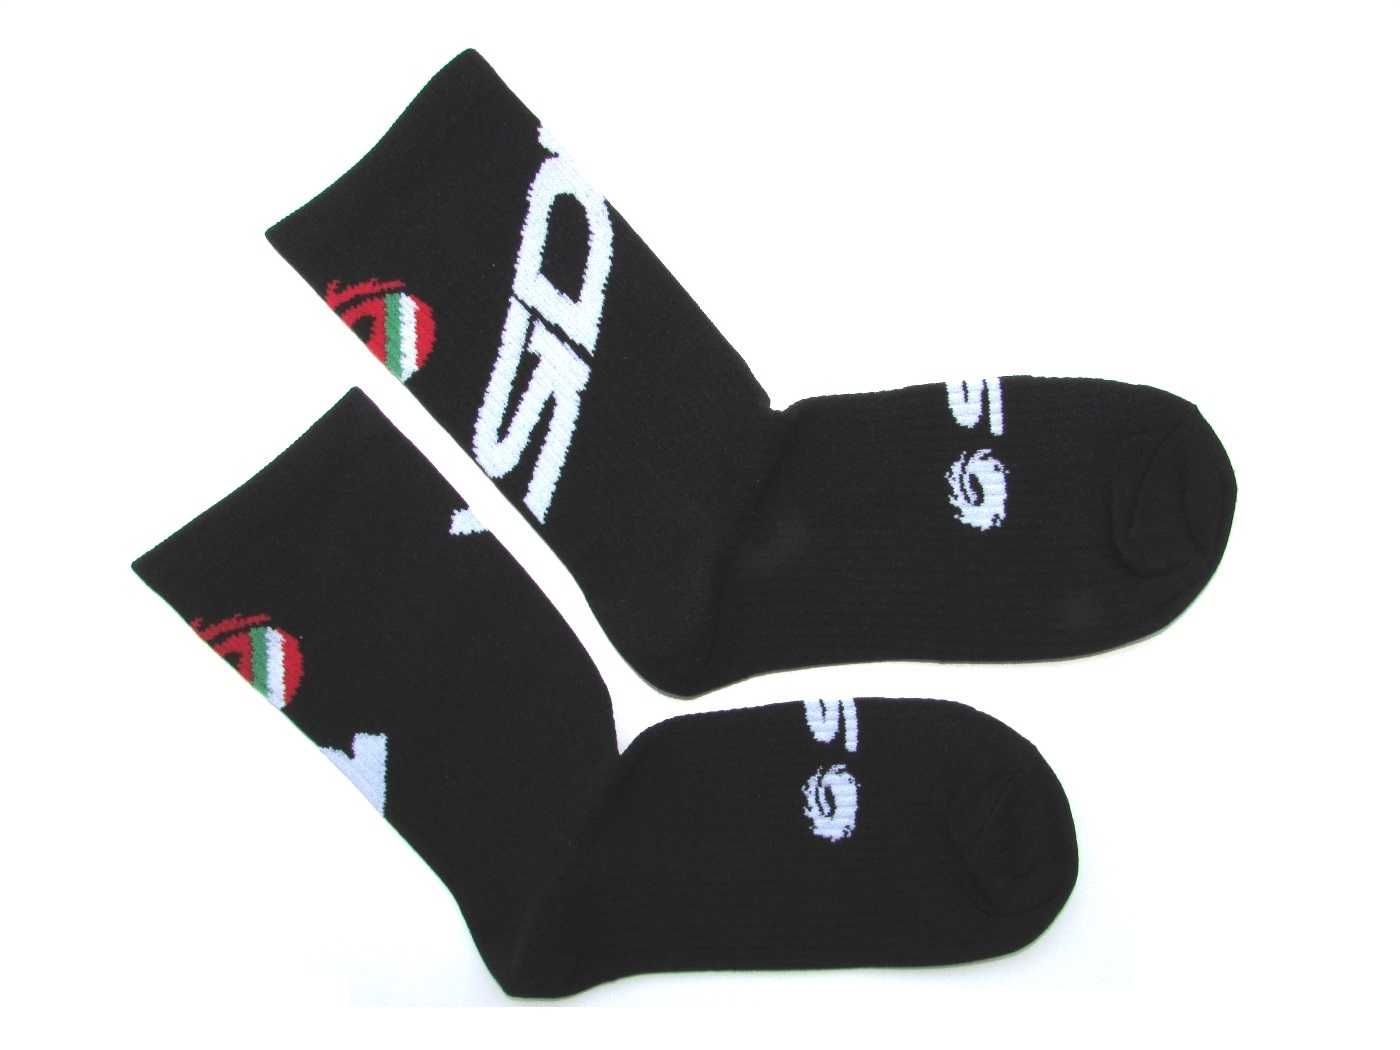 Sidi Cycling Socks Black size M